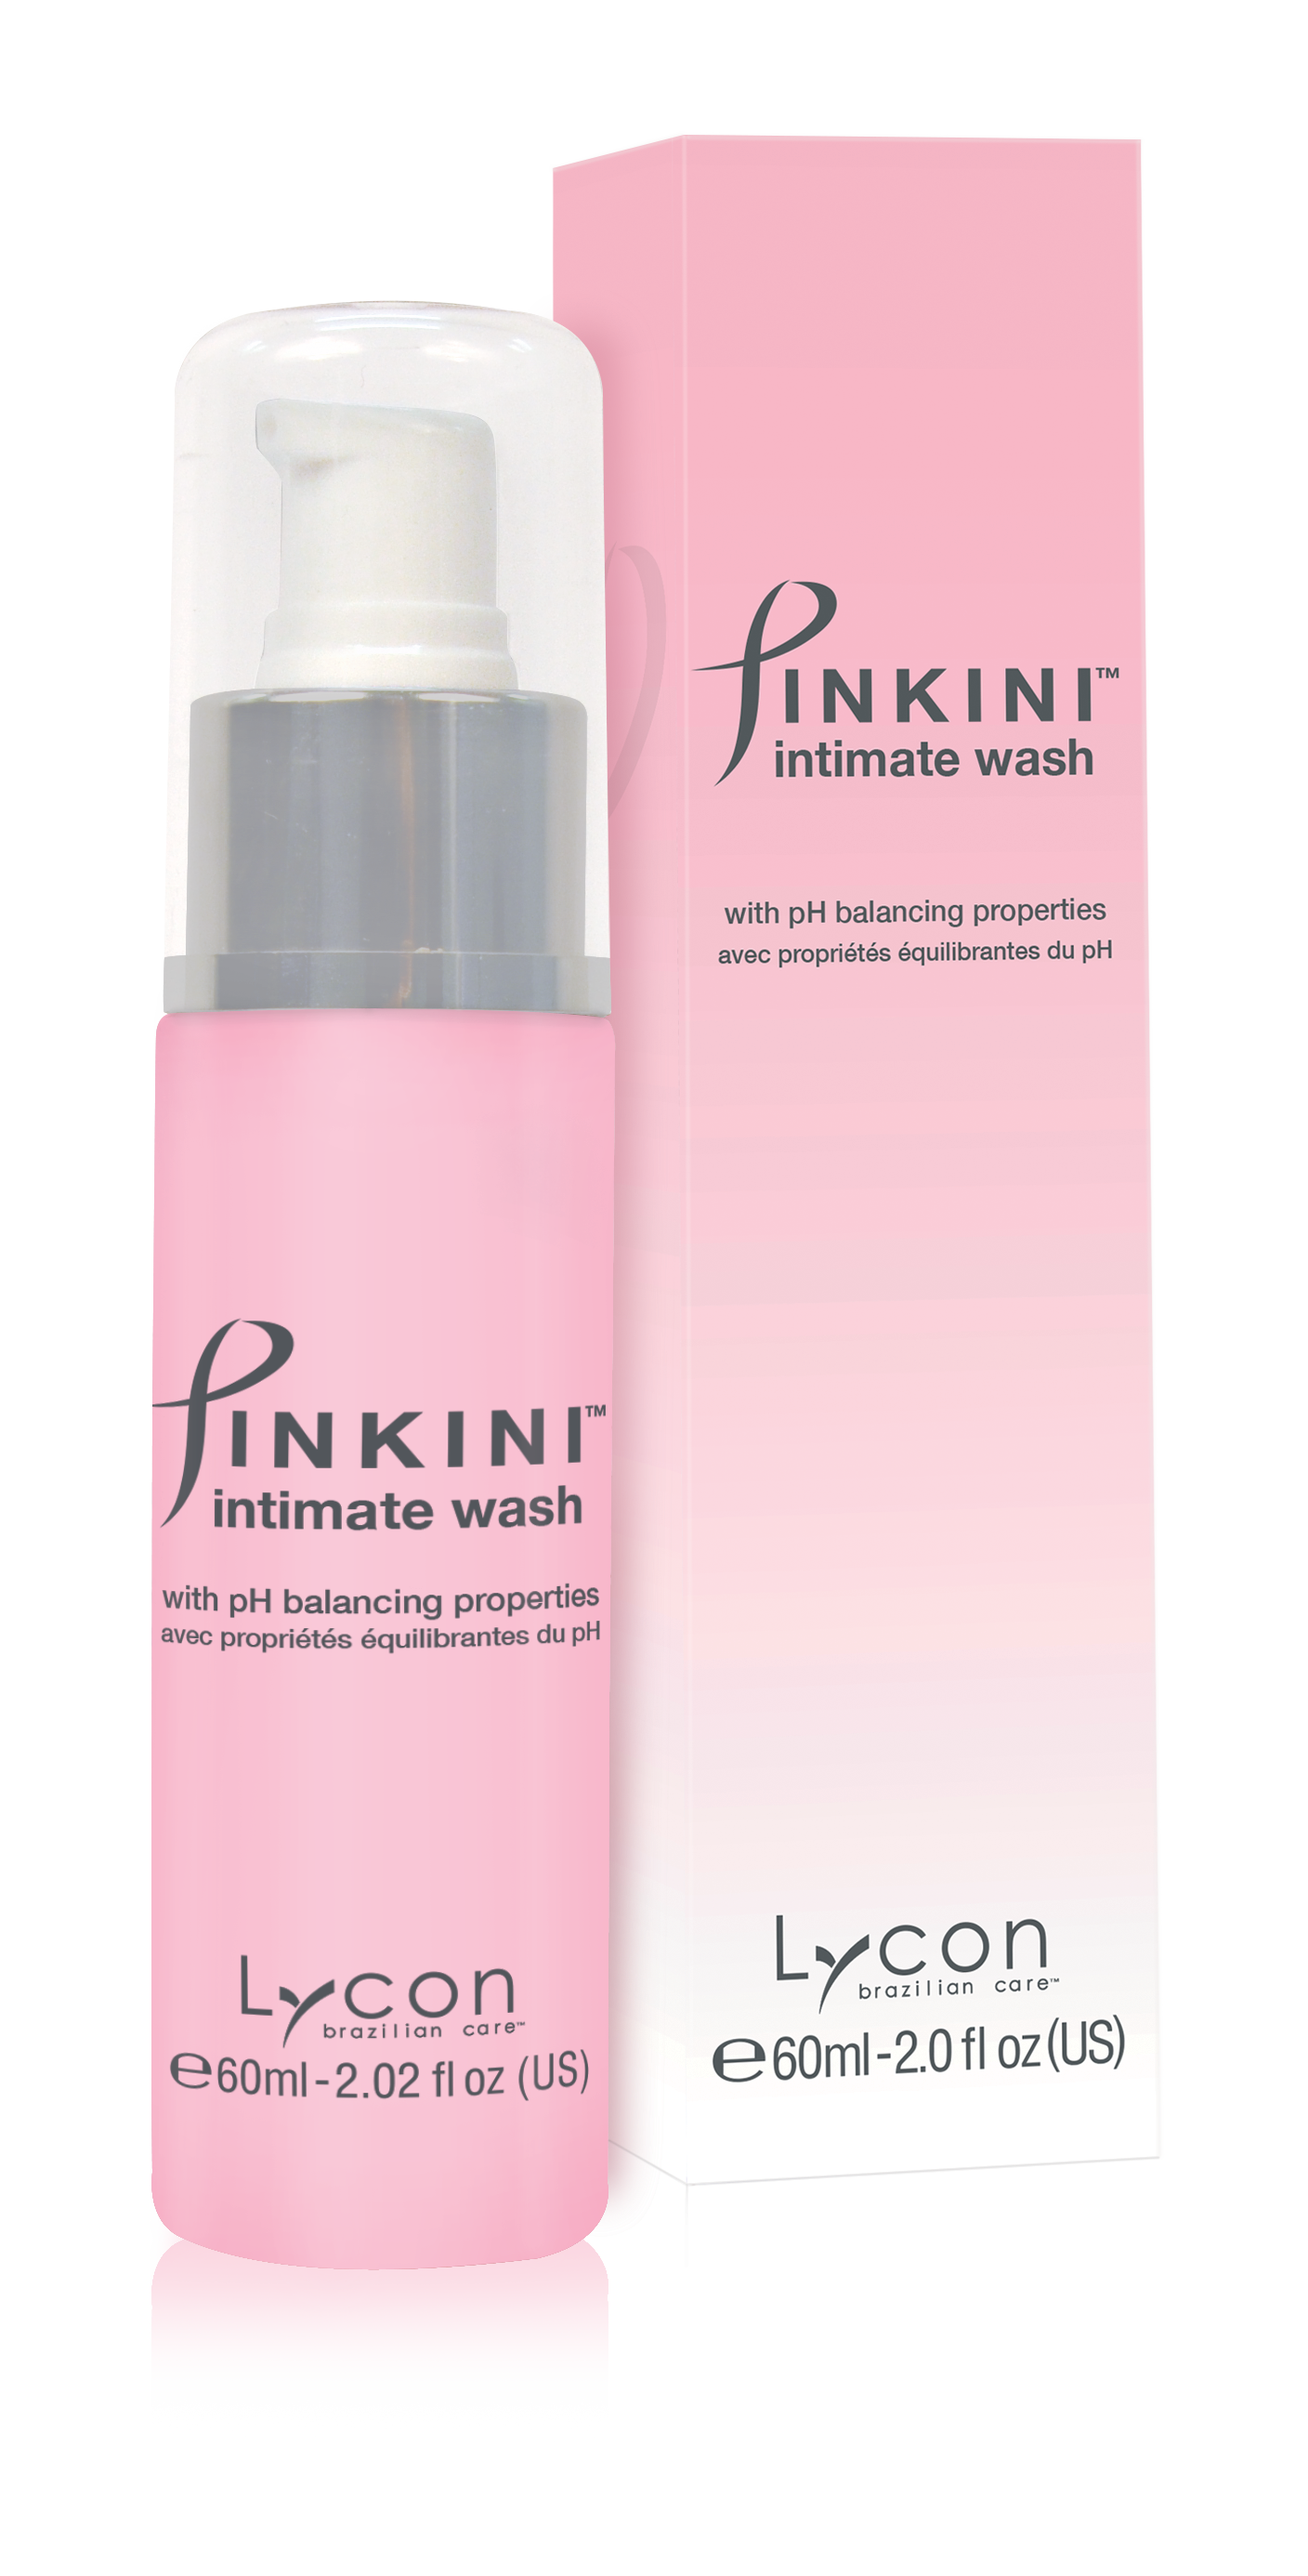 Pinkini Perfect Intimate Care - Intimate Wash and Serum Combo